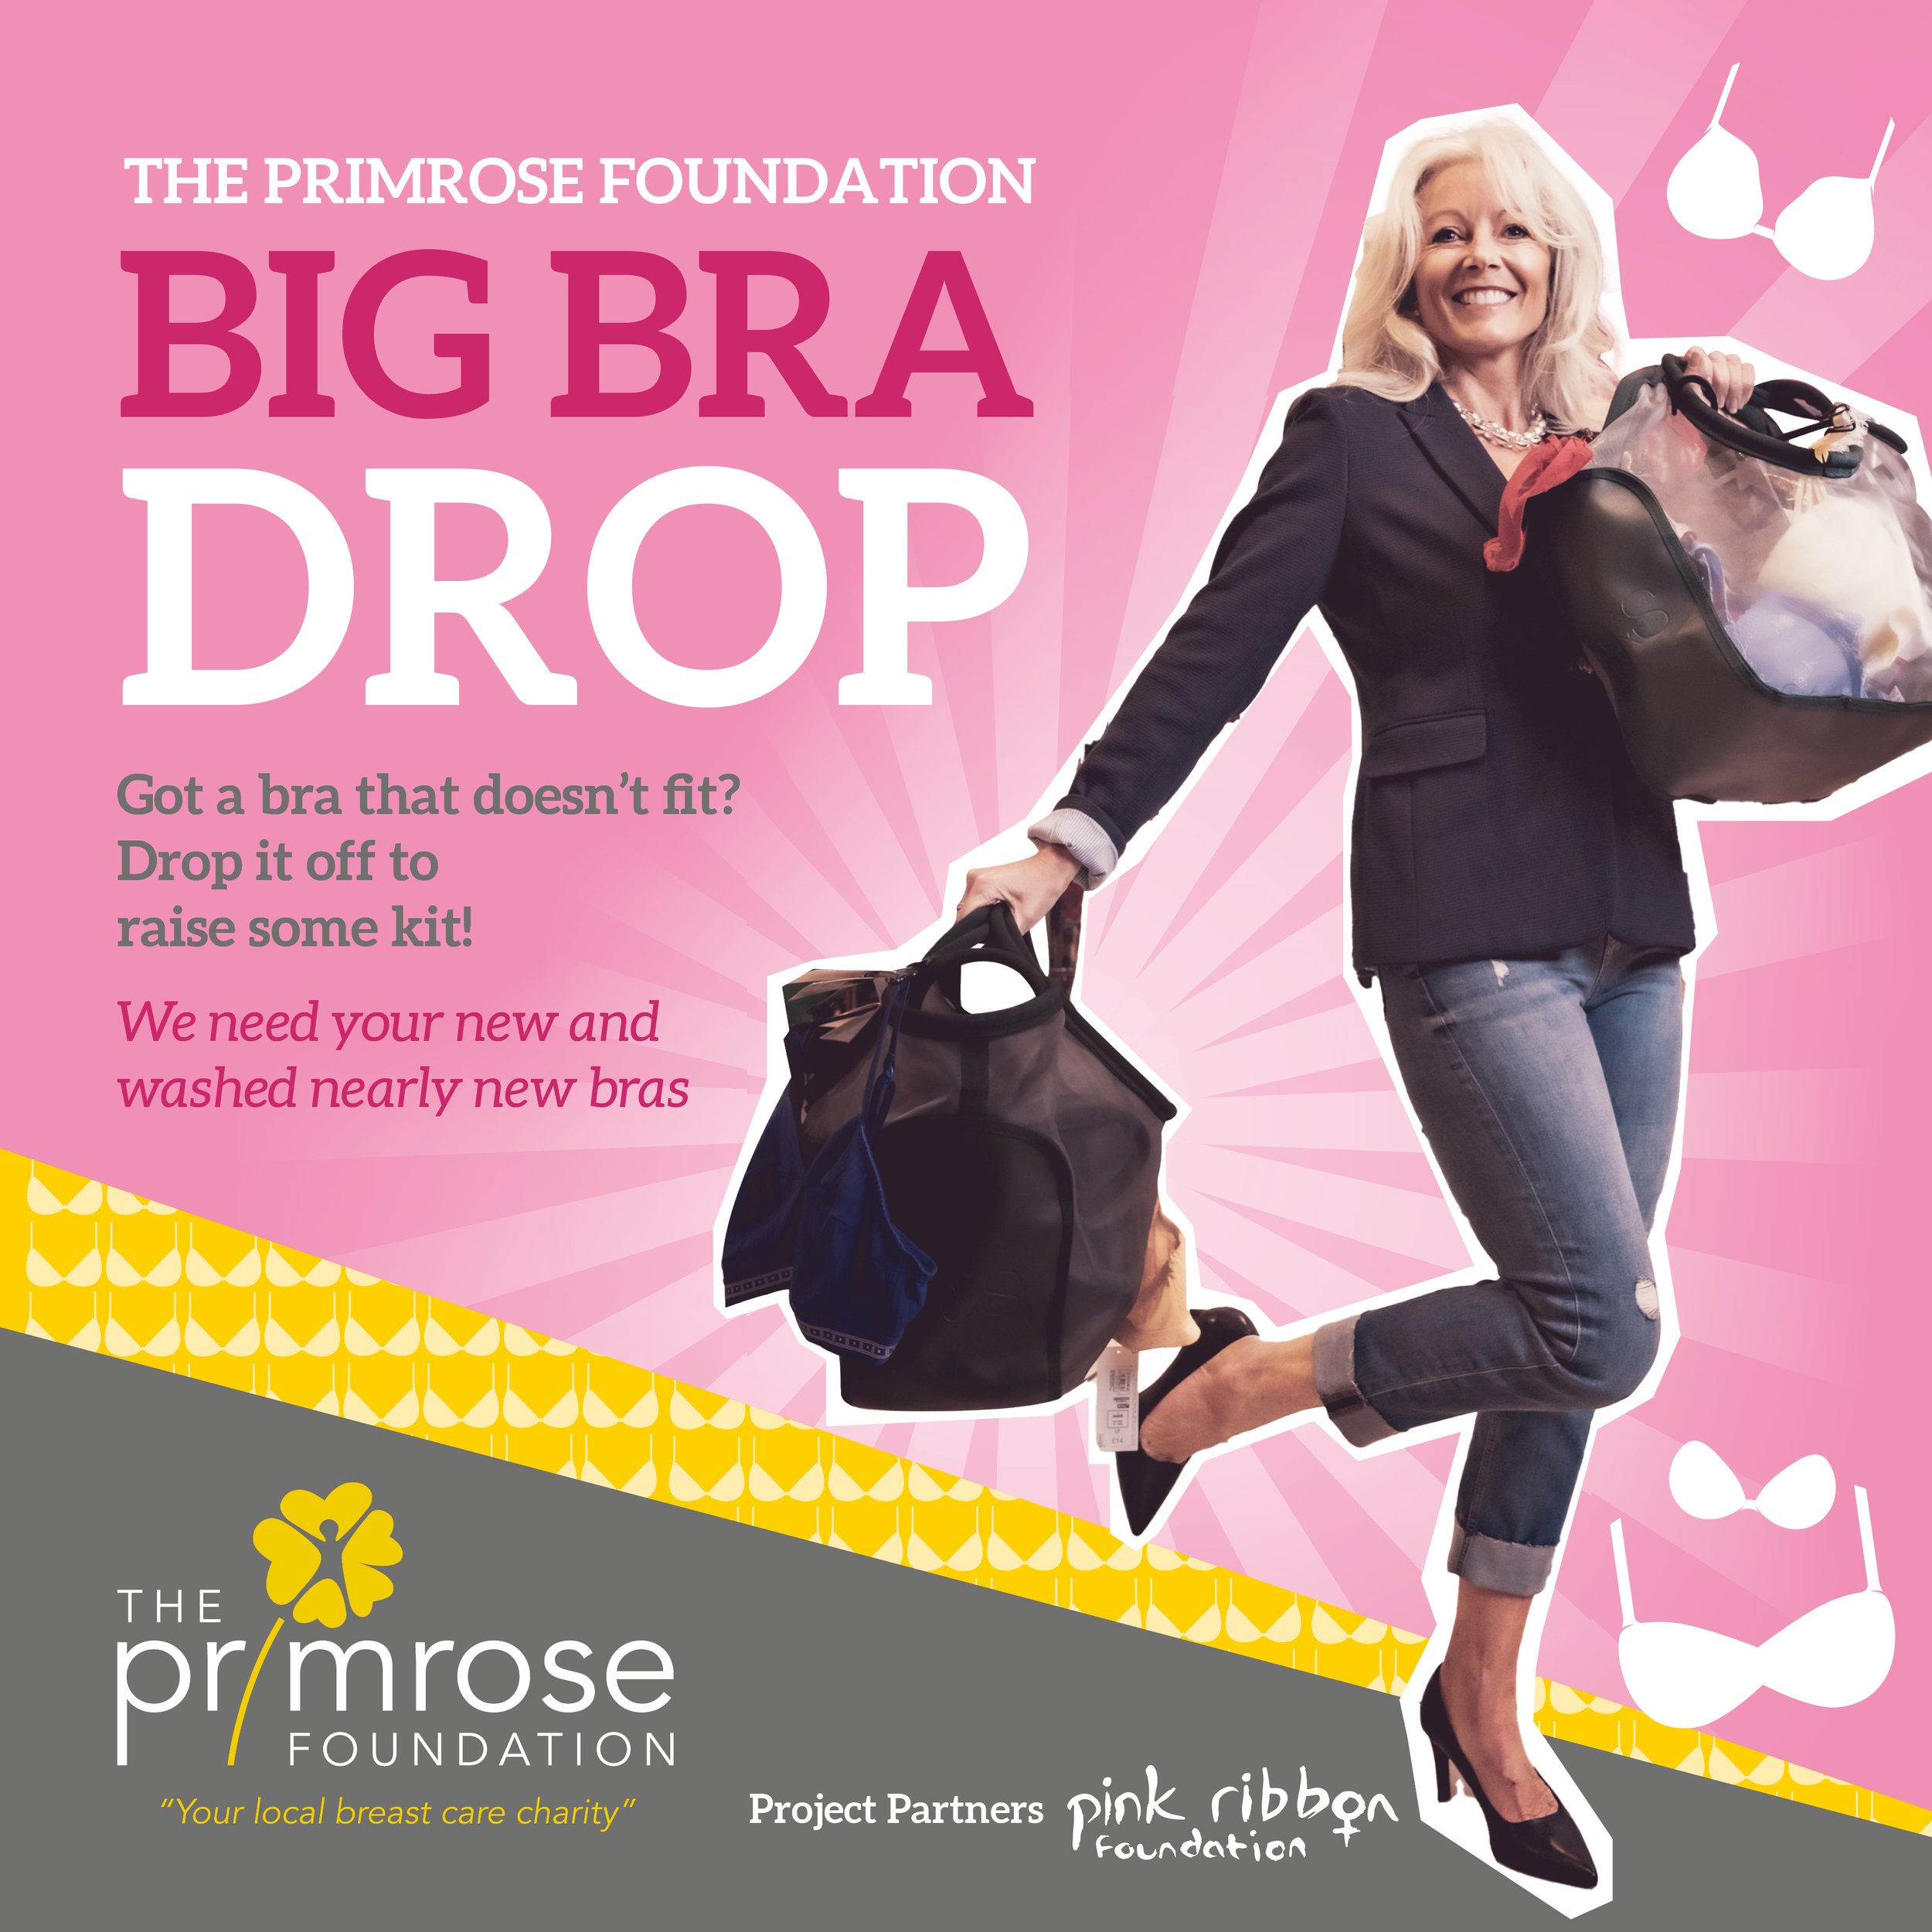 The Big Bra Drop — The Primrose Foundation